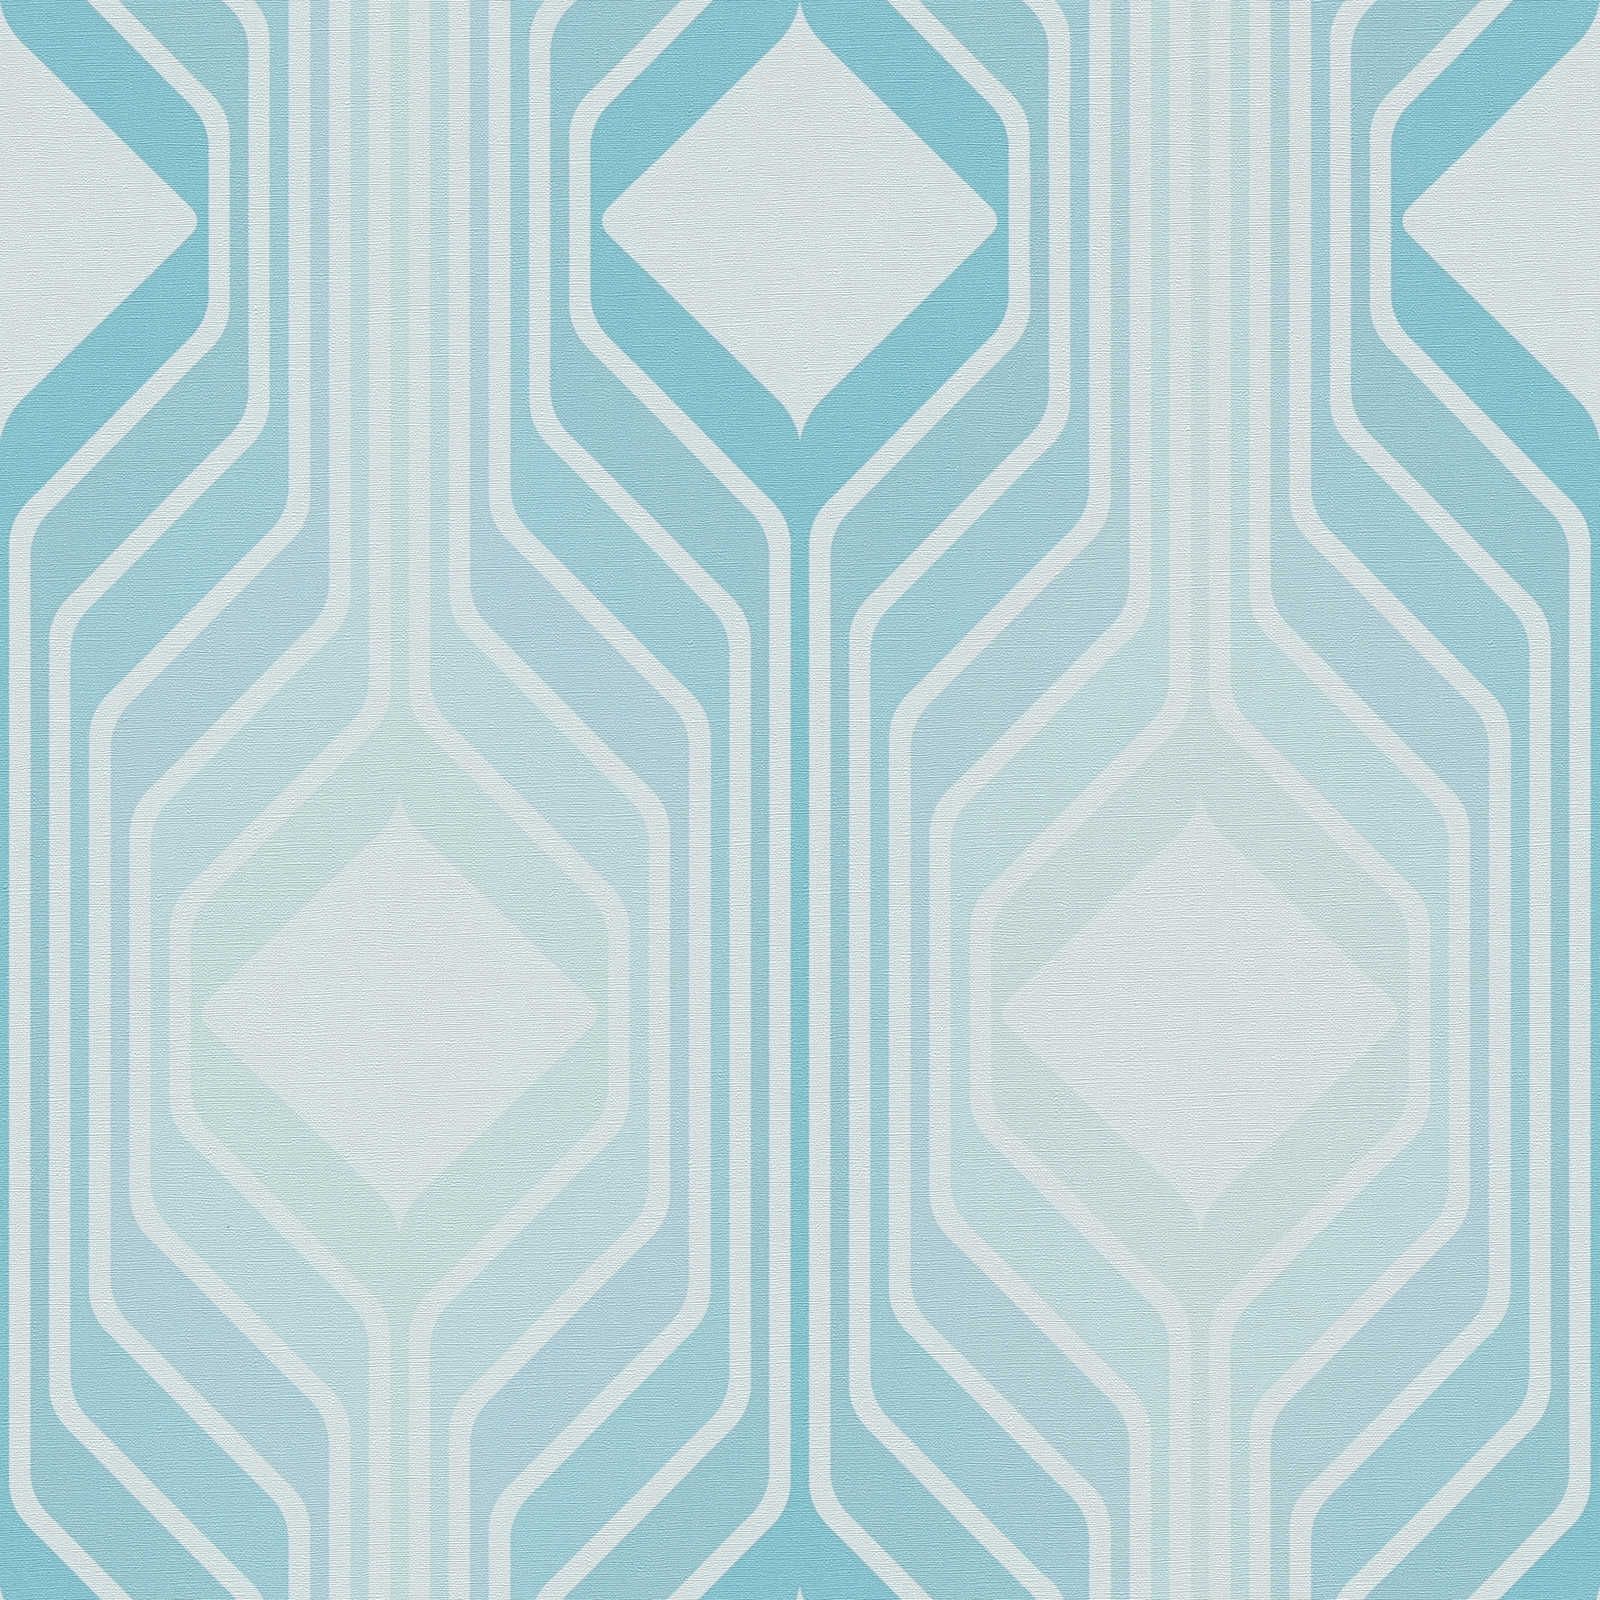 Diamond pattern on retro non-woven wallpaper - blue, light blue, turquoise
